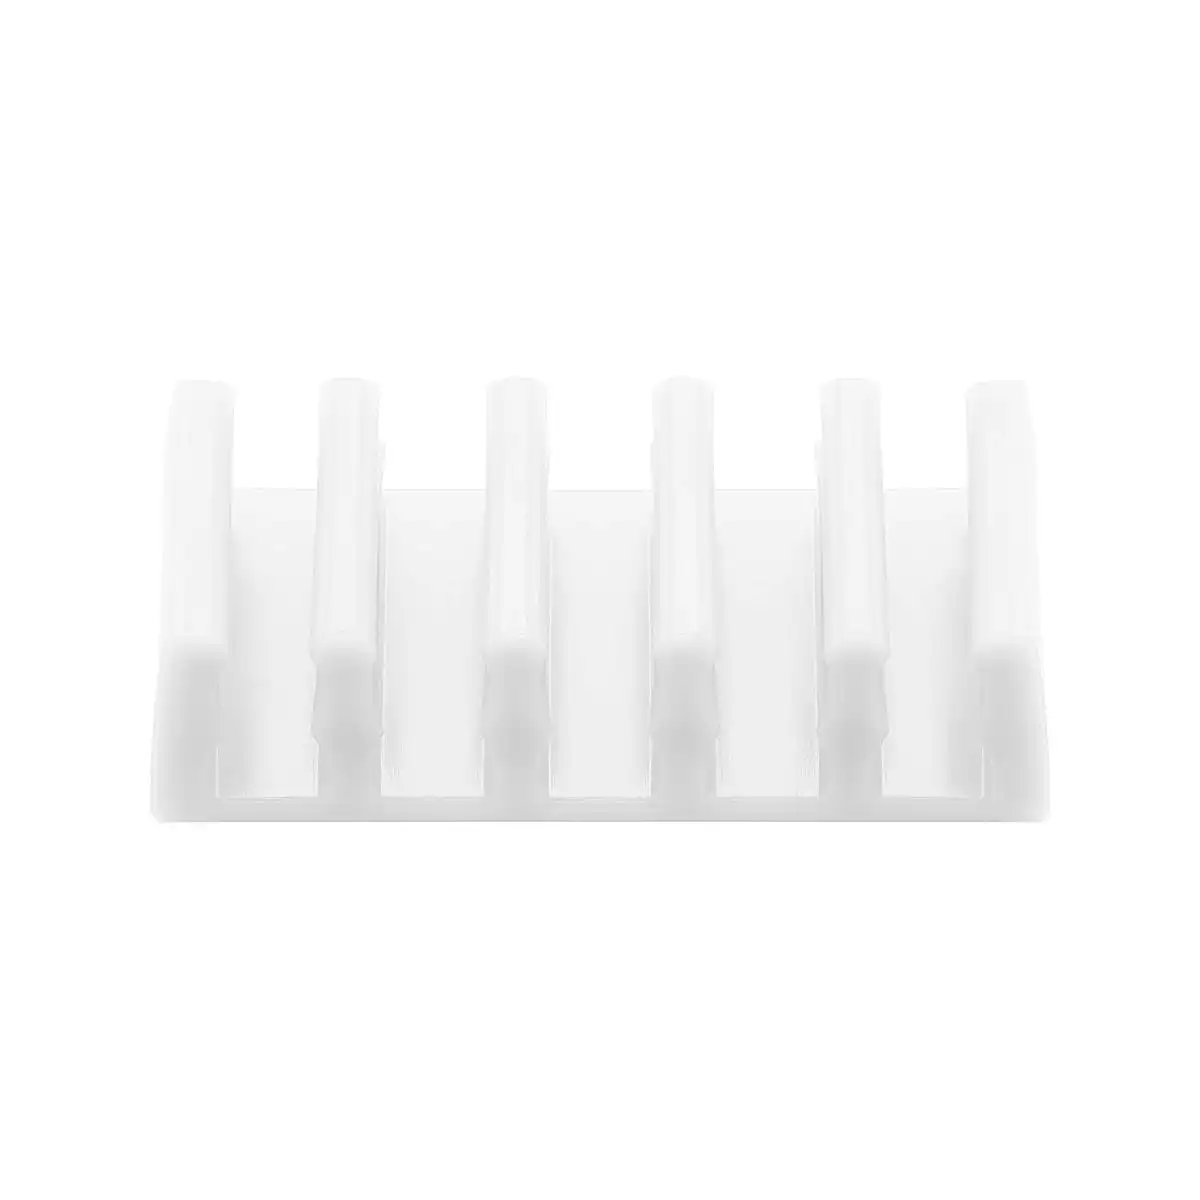 Goobay Cable Management 5 Slots Plastic - White